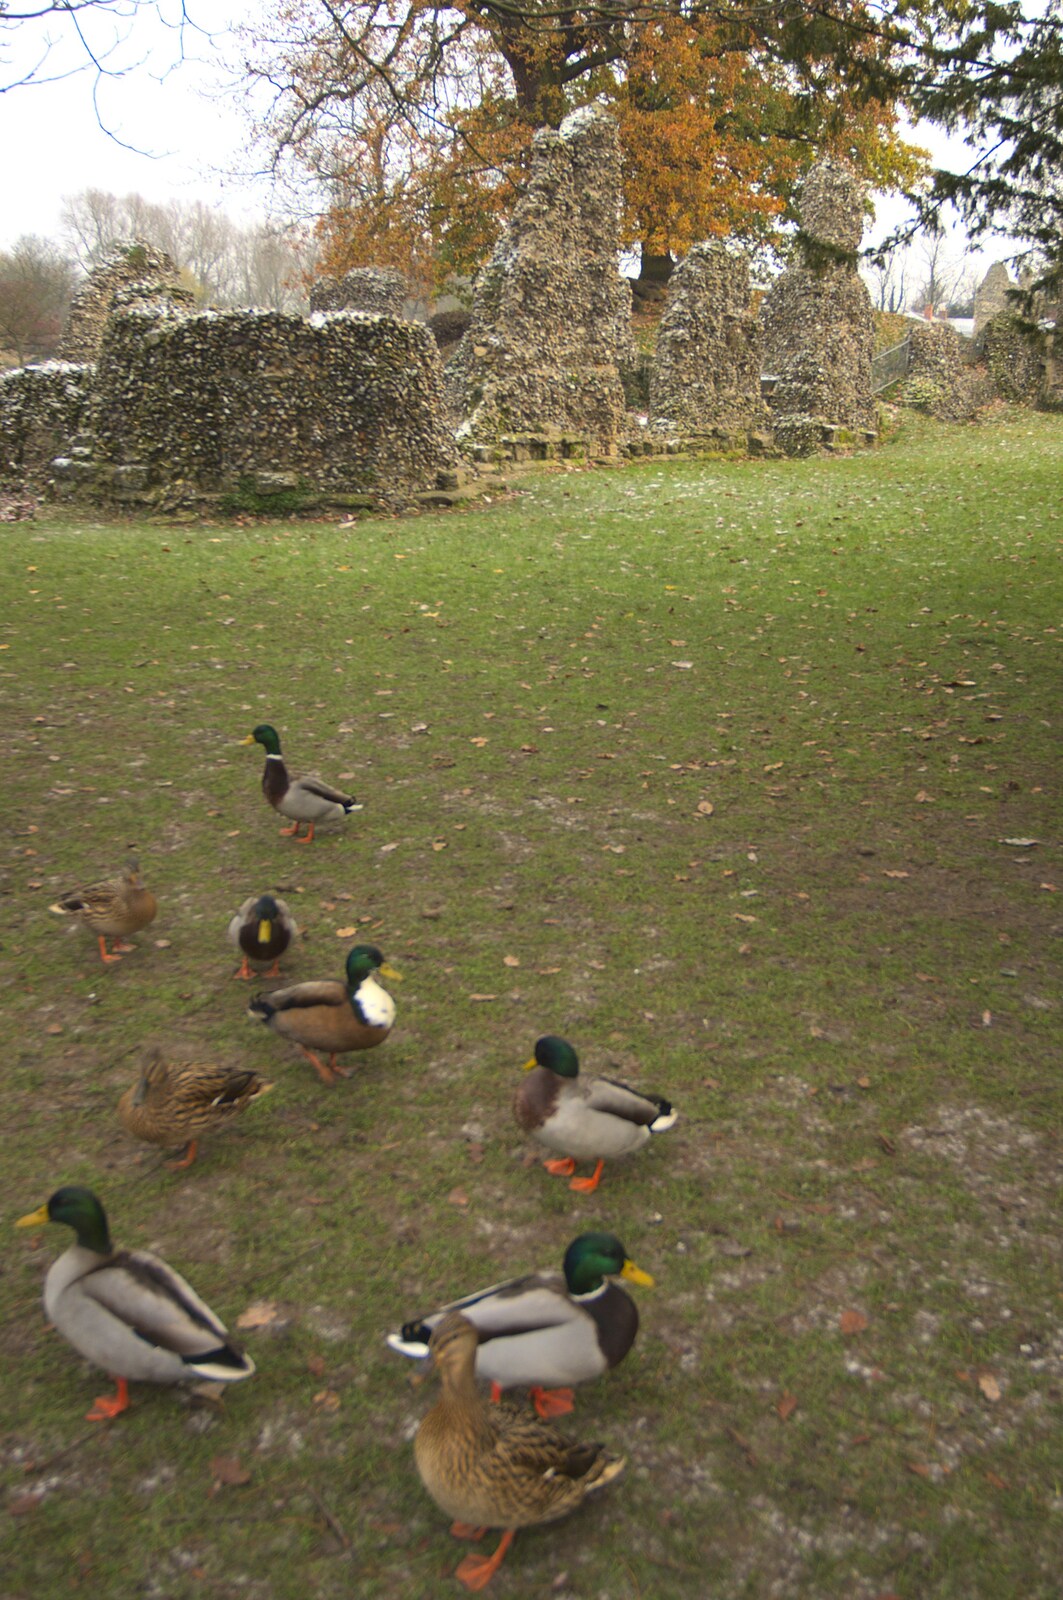 A Christmas Fair, Bury St. Edmunds, Suffolk - 28th November 2010: Ducks and abbey ruins in the park